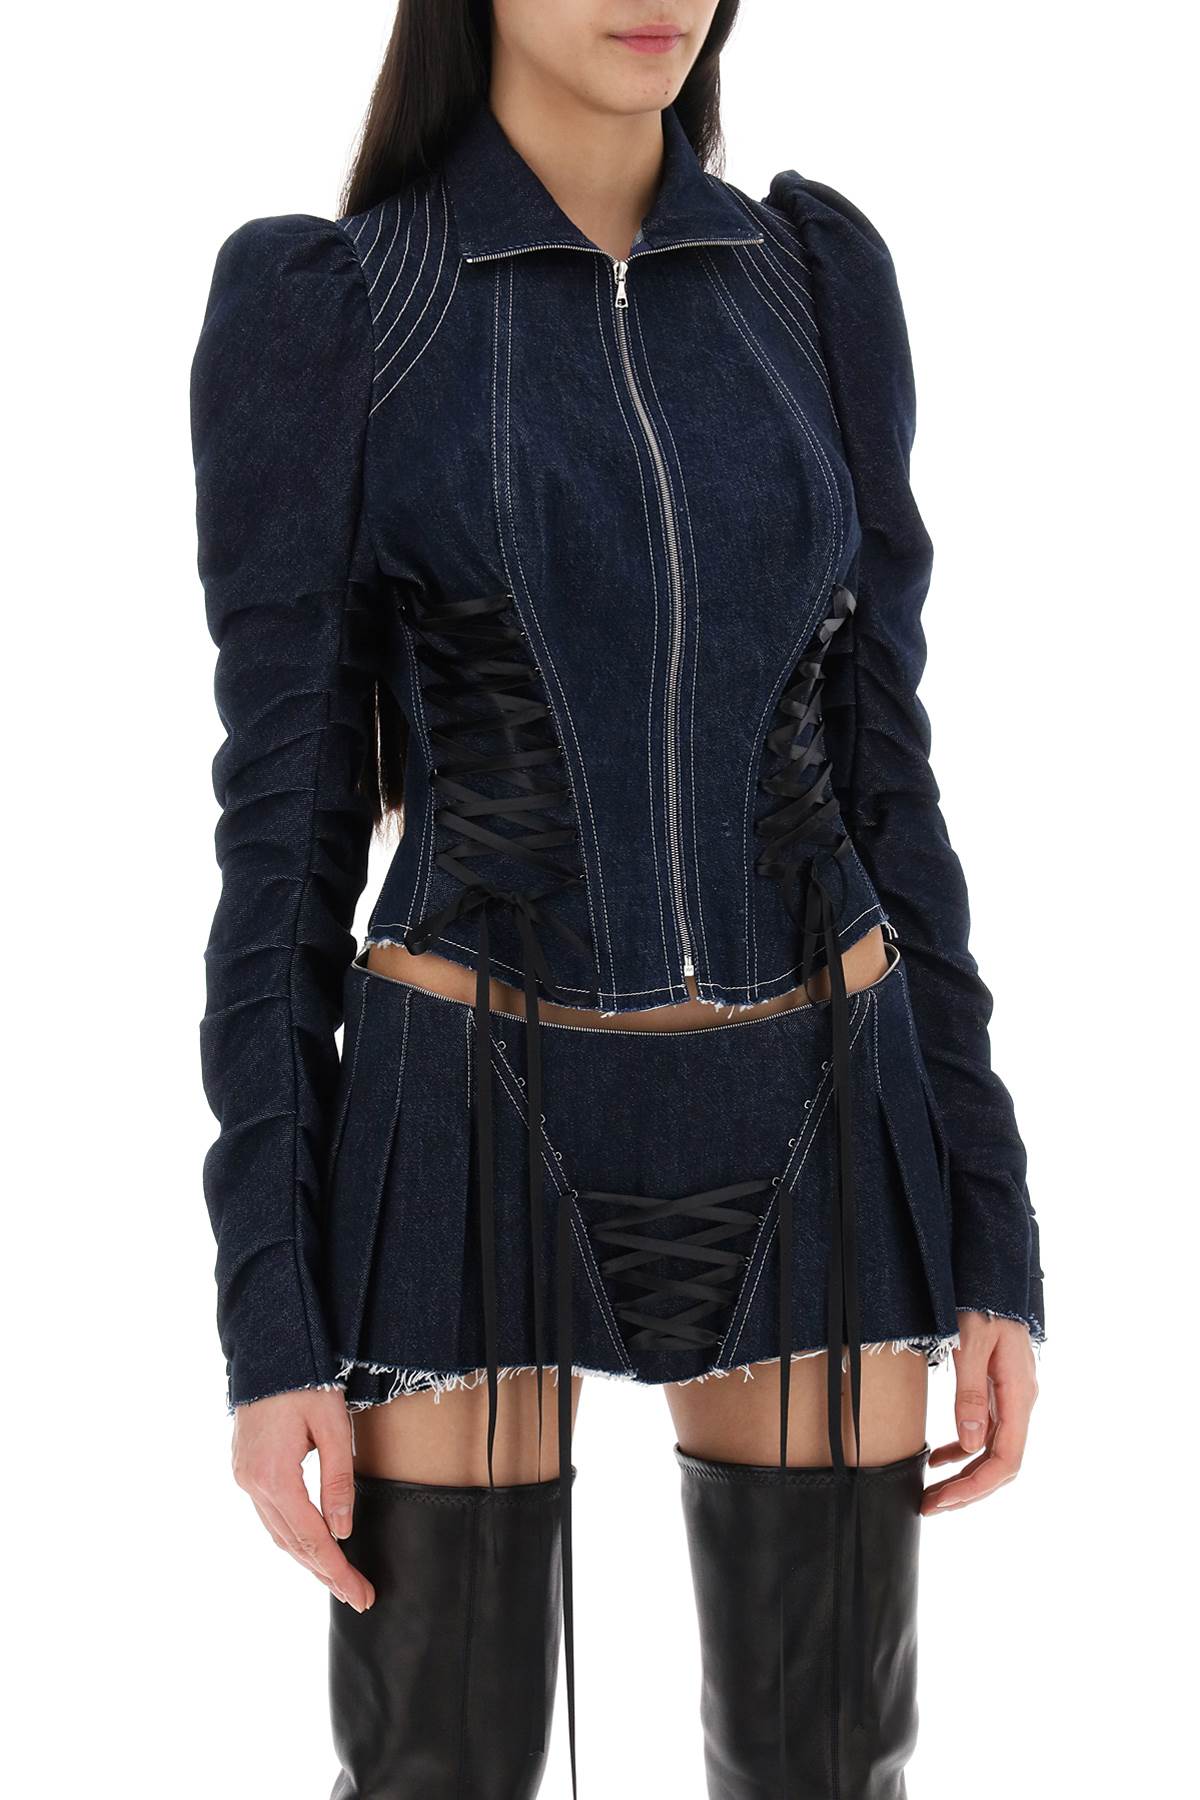 Dilara findikoglu denim corset-style jacket with-1